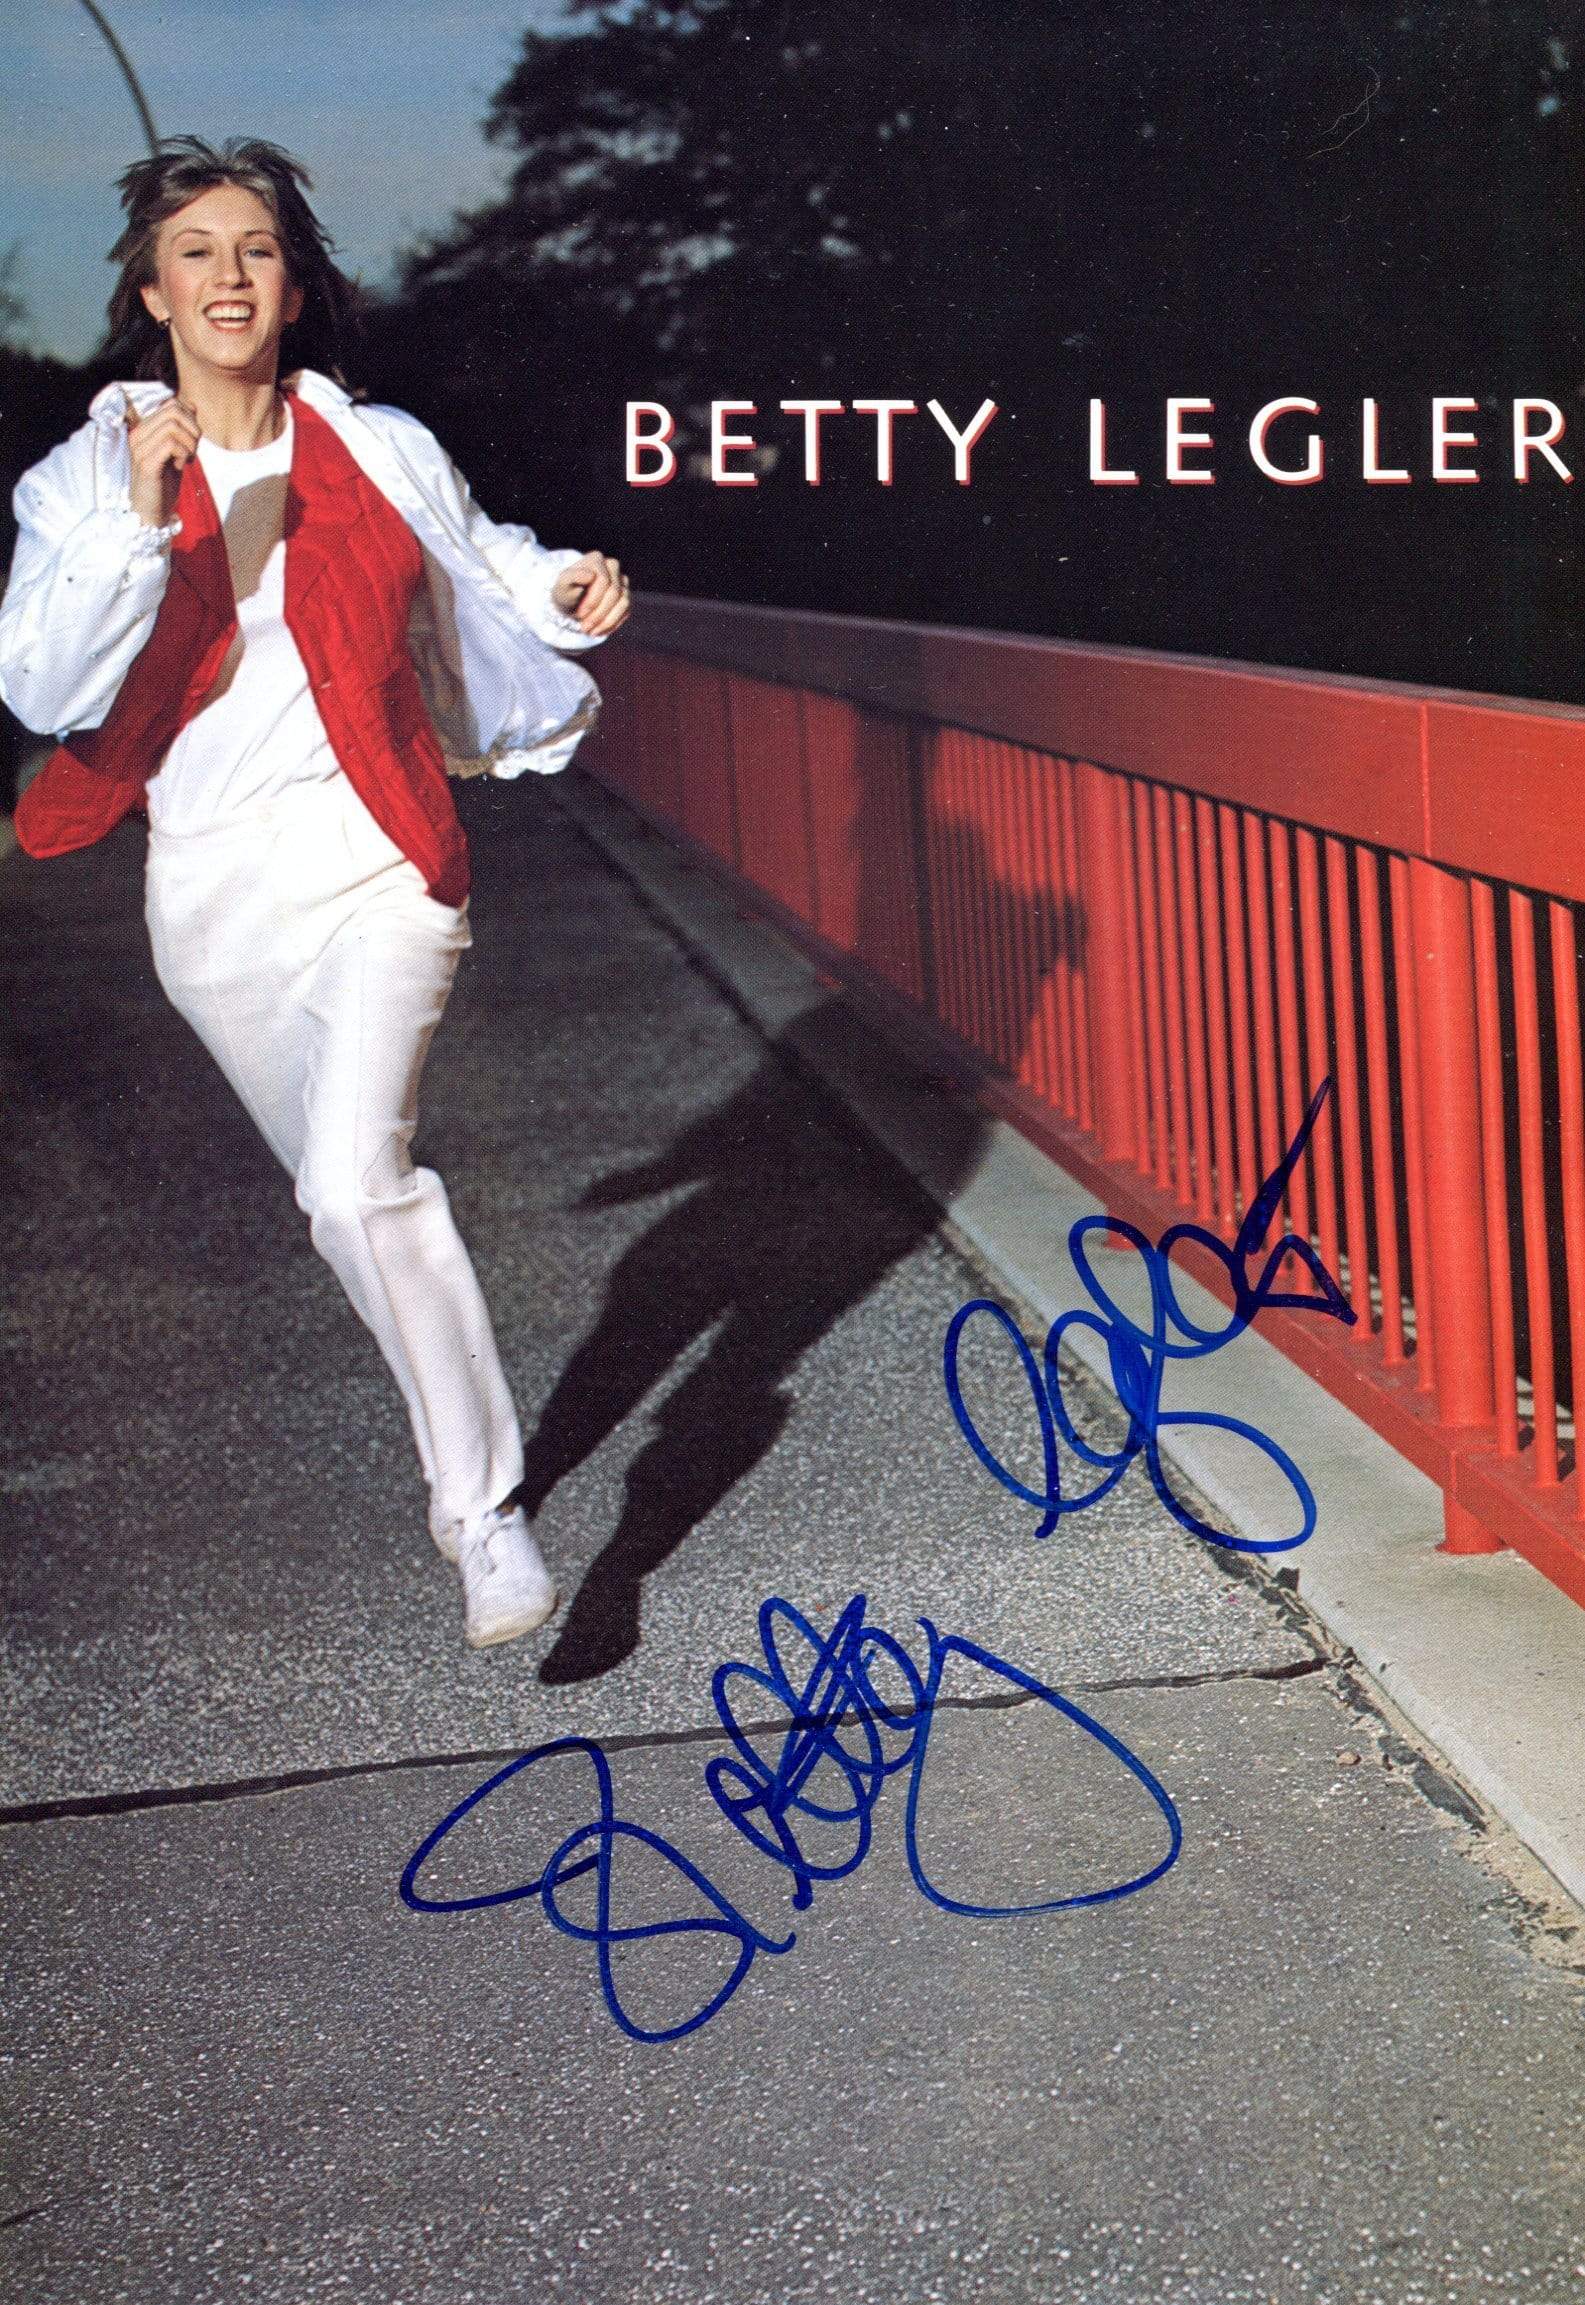 Betty  Legler Autograph Autogramm | ID 6960268214421